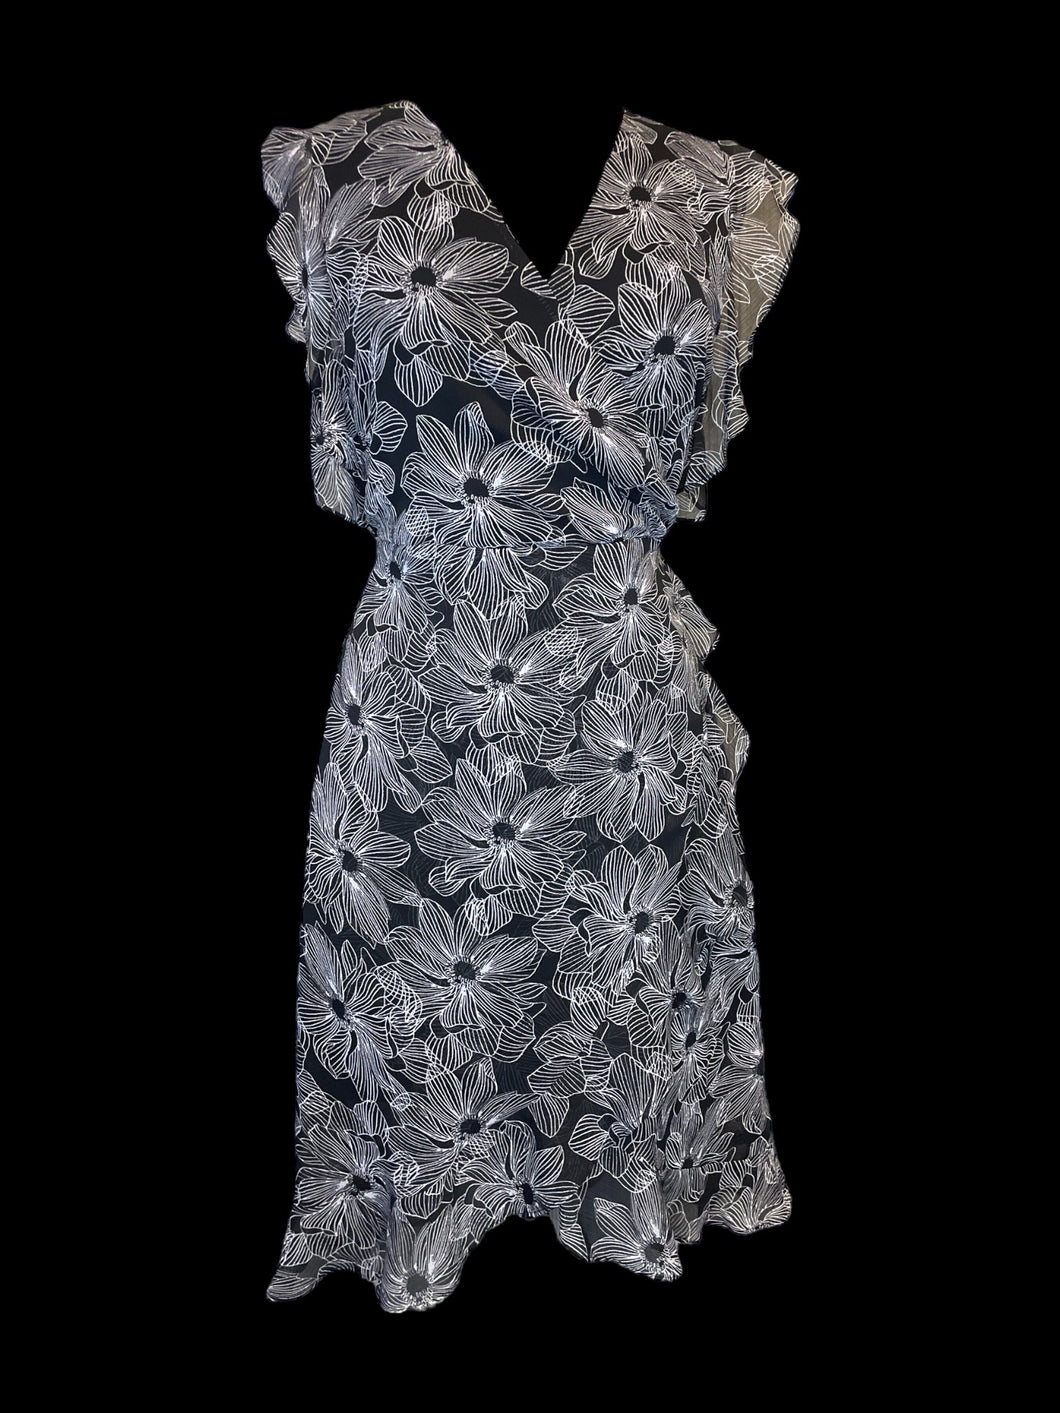 L Black sleeveless mock wrap dress w/ sheer white floral pattern skirt, back tie, & ruffle details